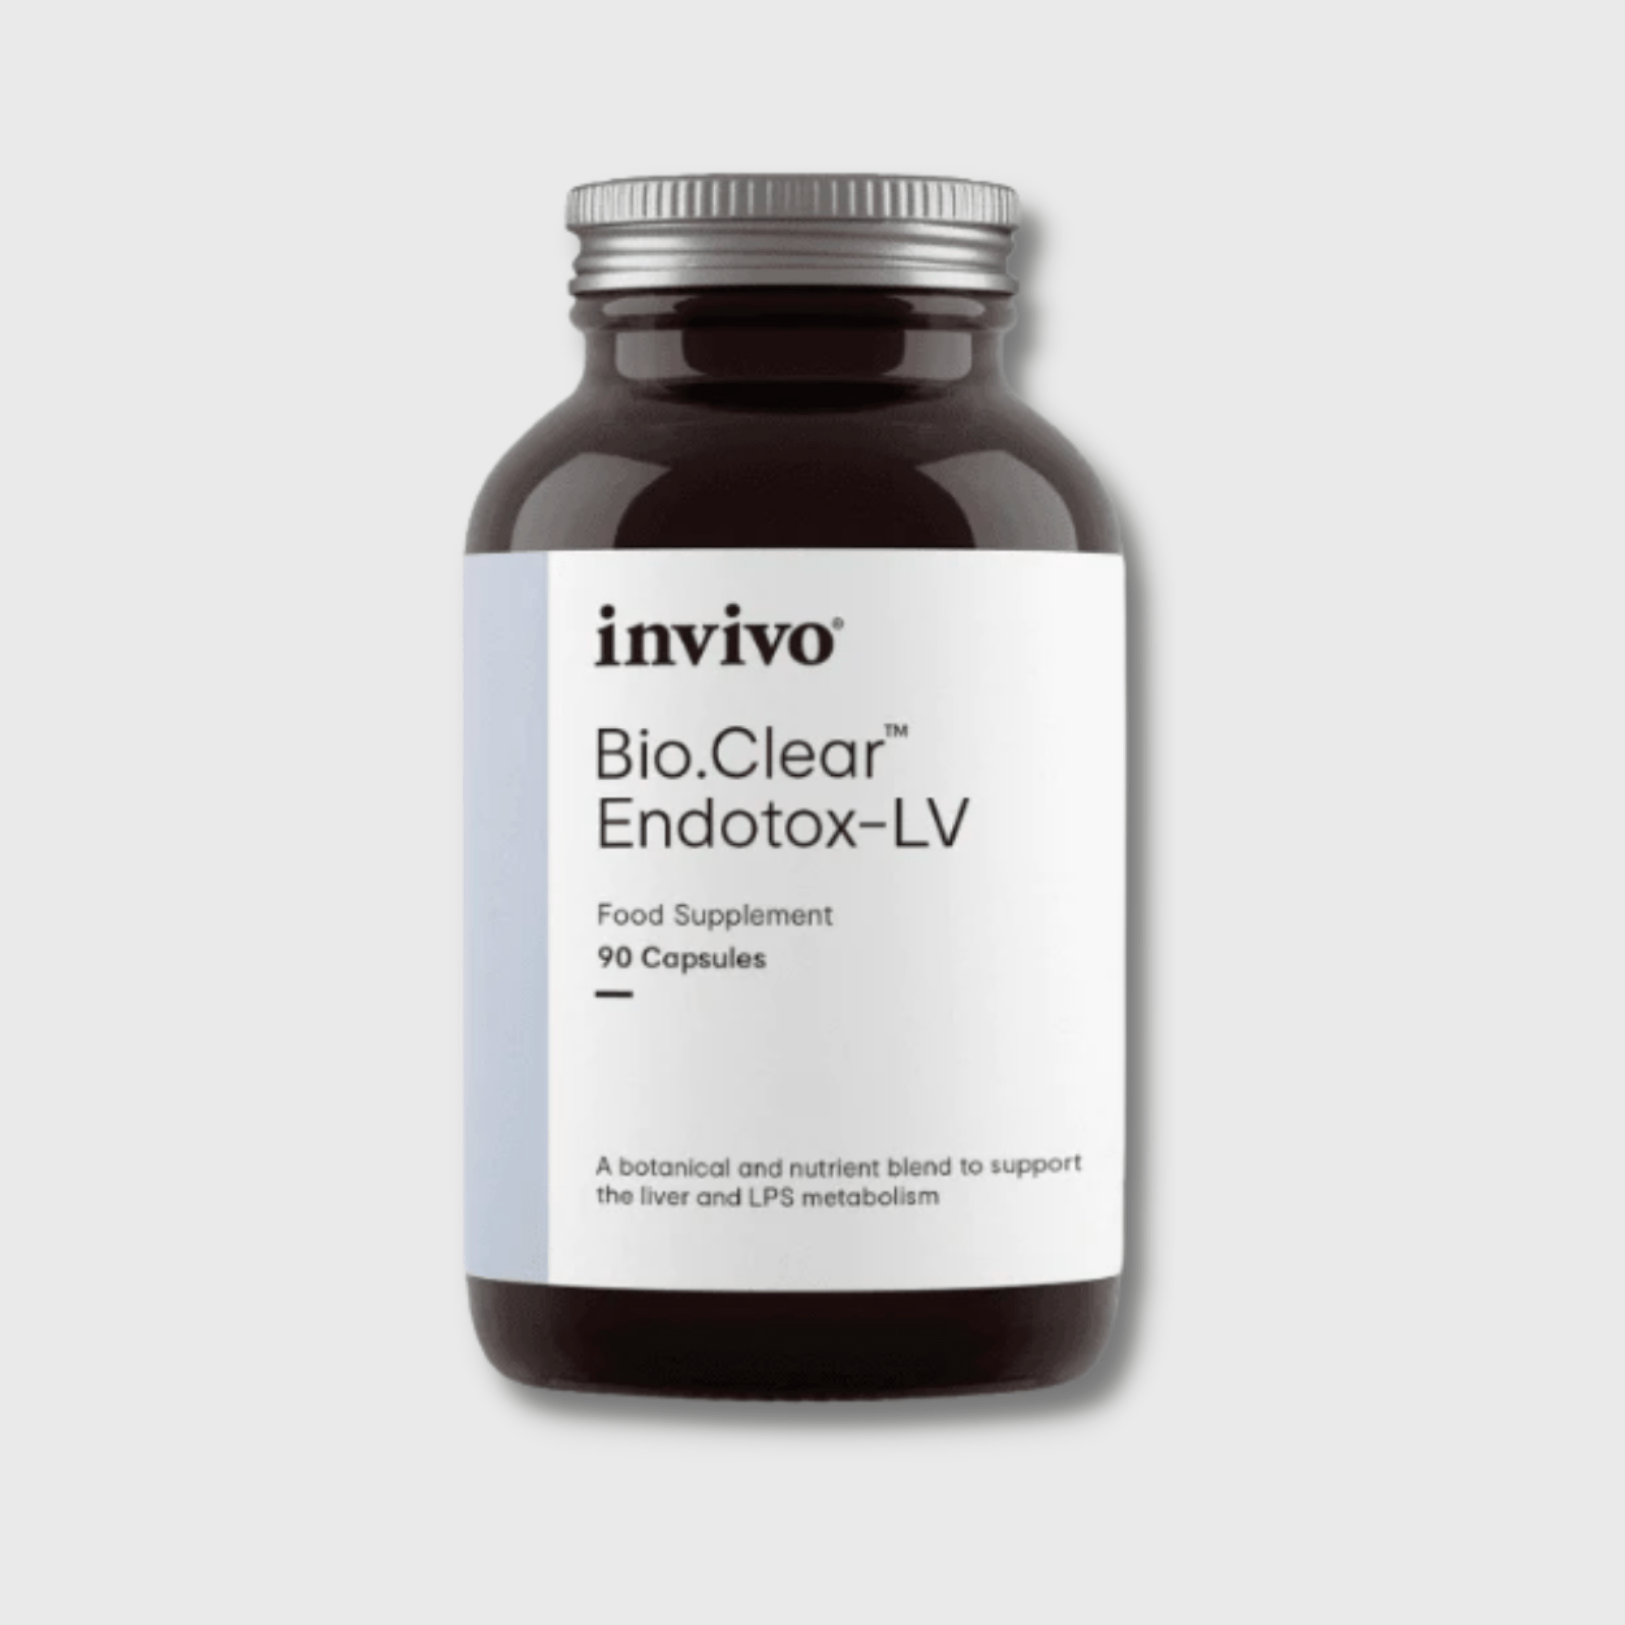 Bio.Clear Endotox-LV